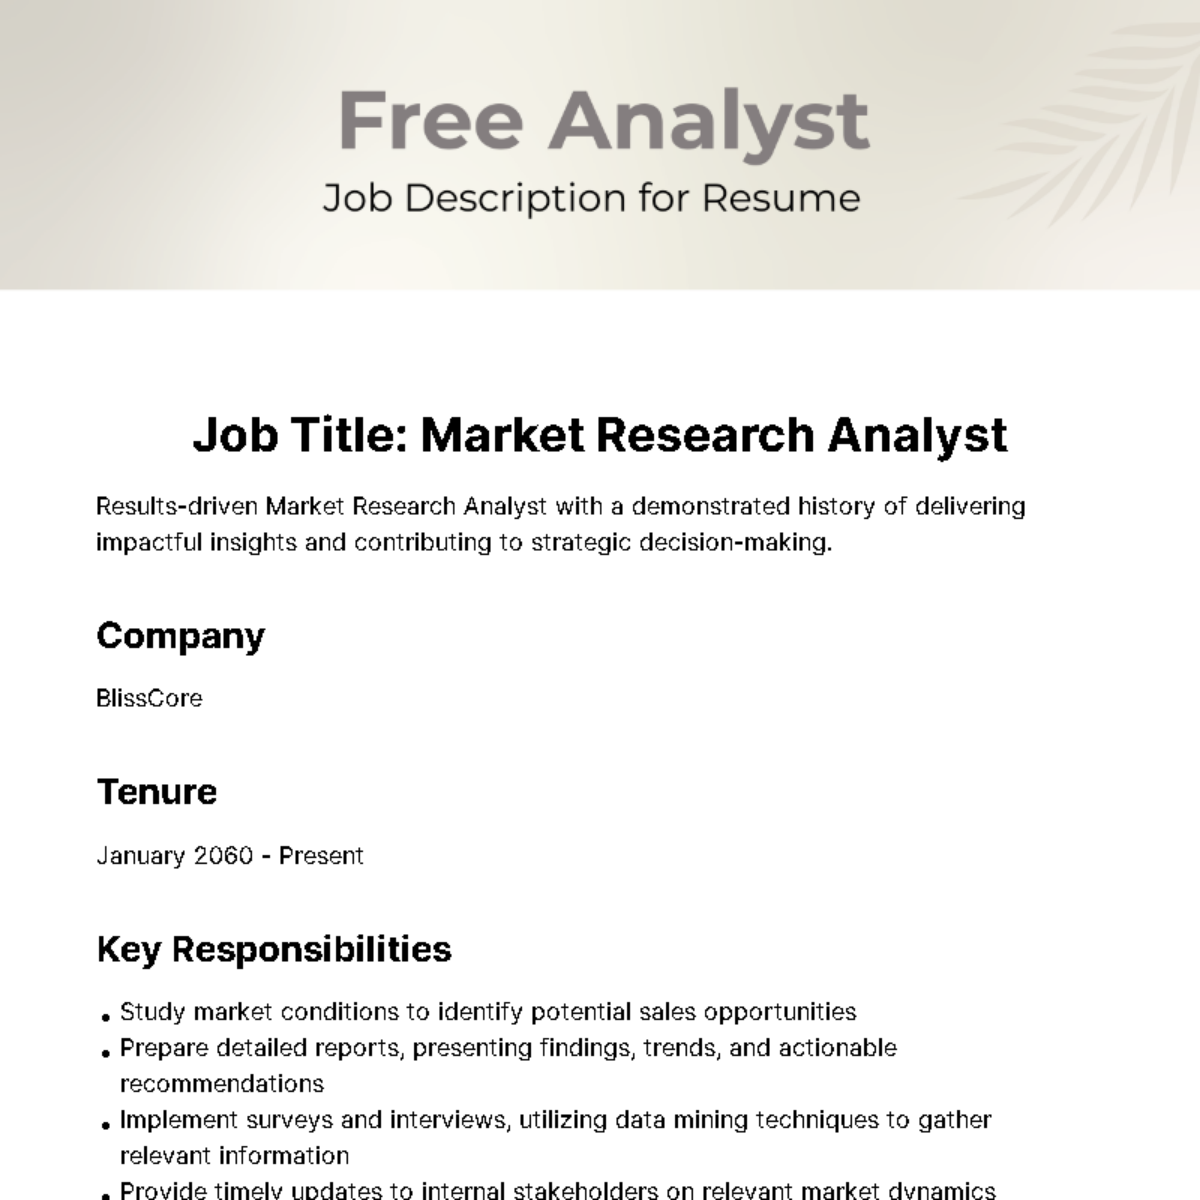 Analyst Job Description for Resume Template